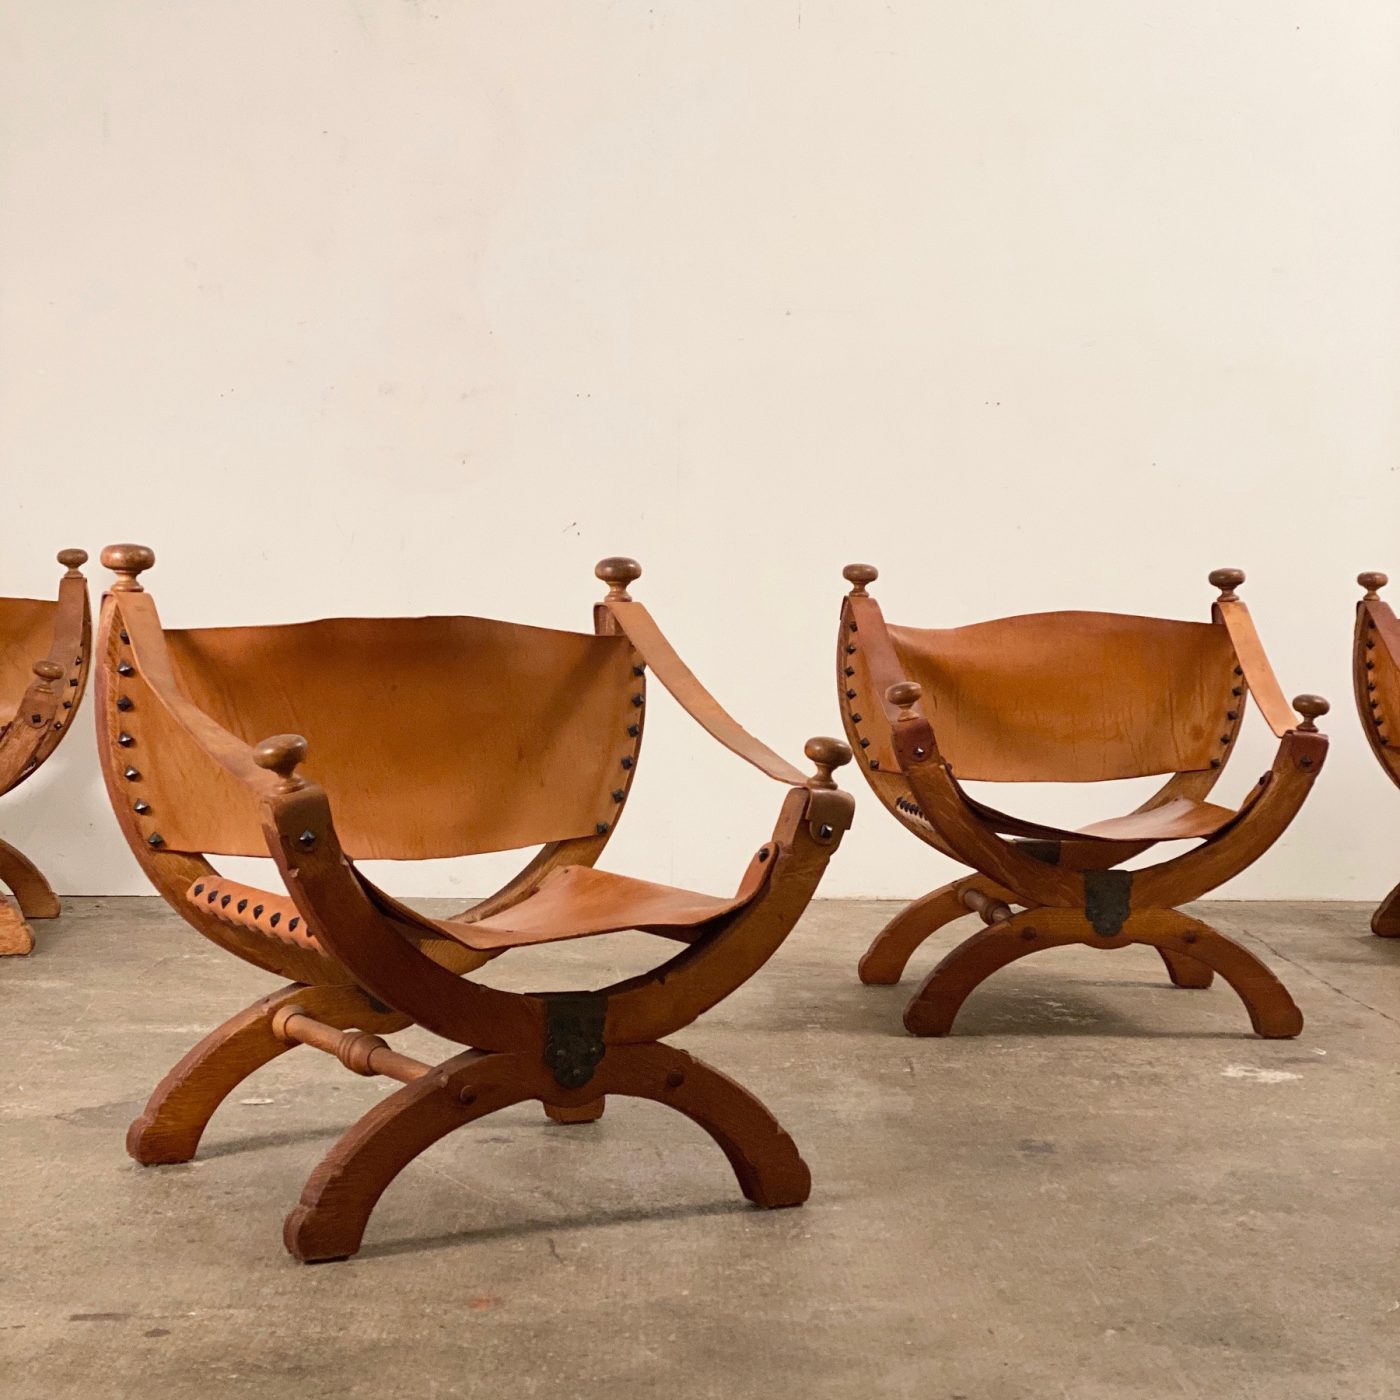 objet-vagabond-leather-chairs0004